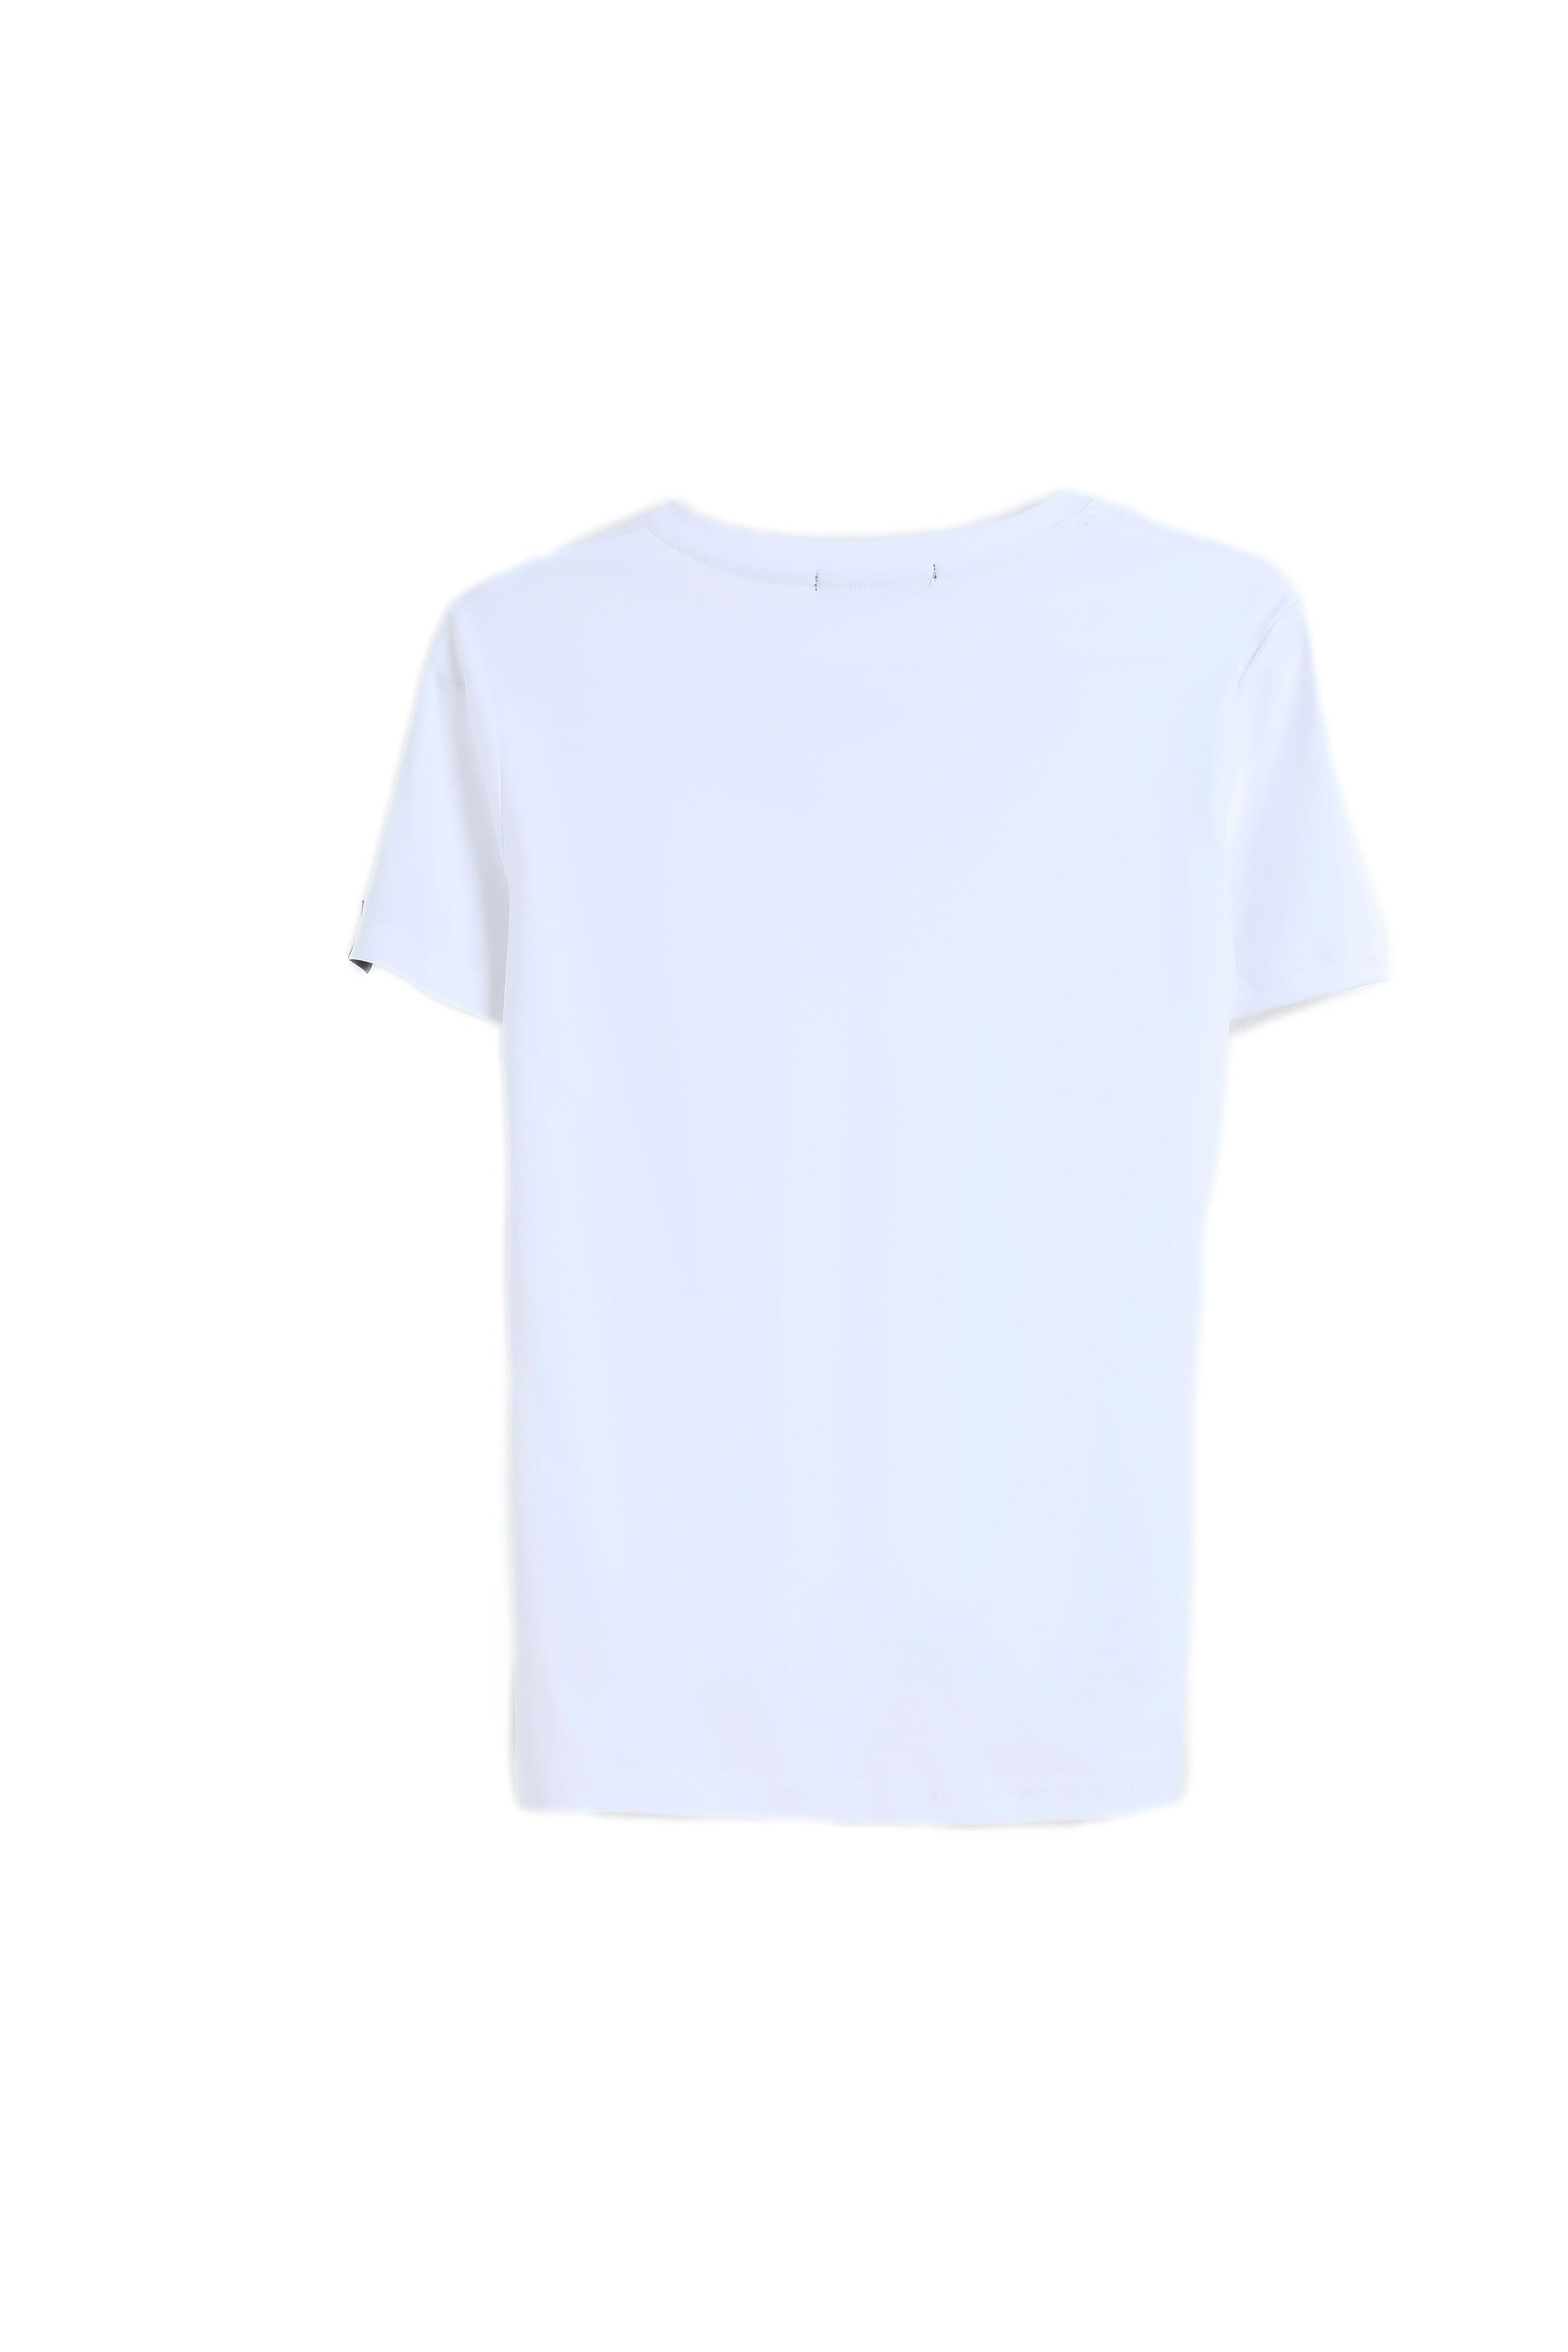 160 Classic Women V Neck Mercerized Cotton T shirt - Bellemere New York 